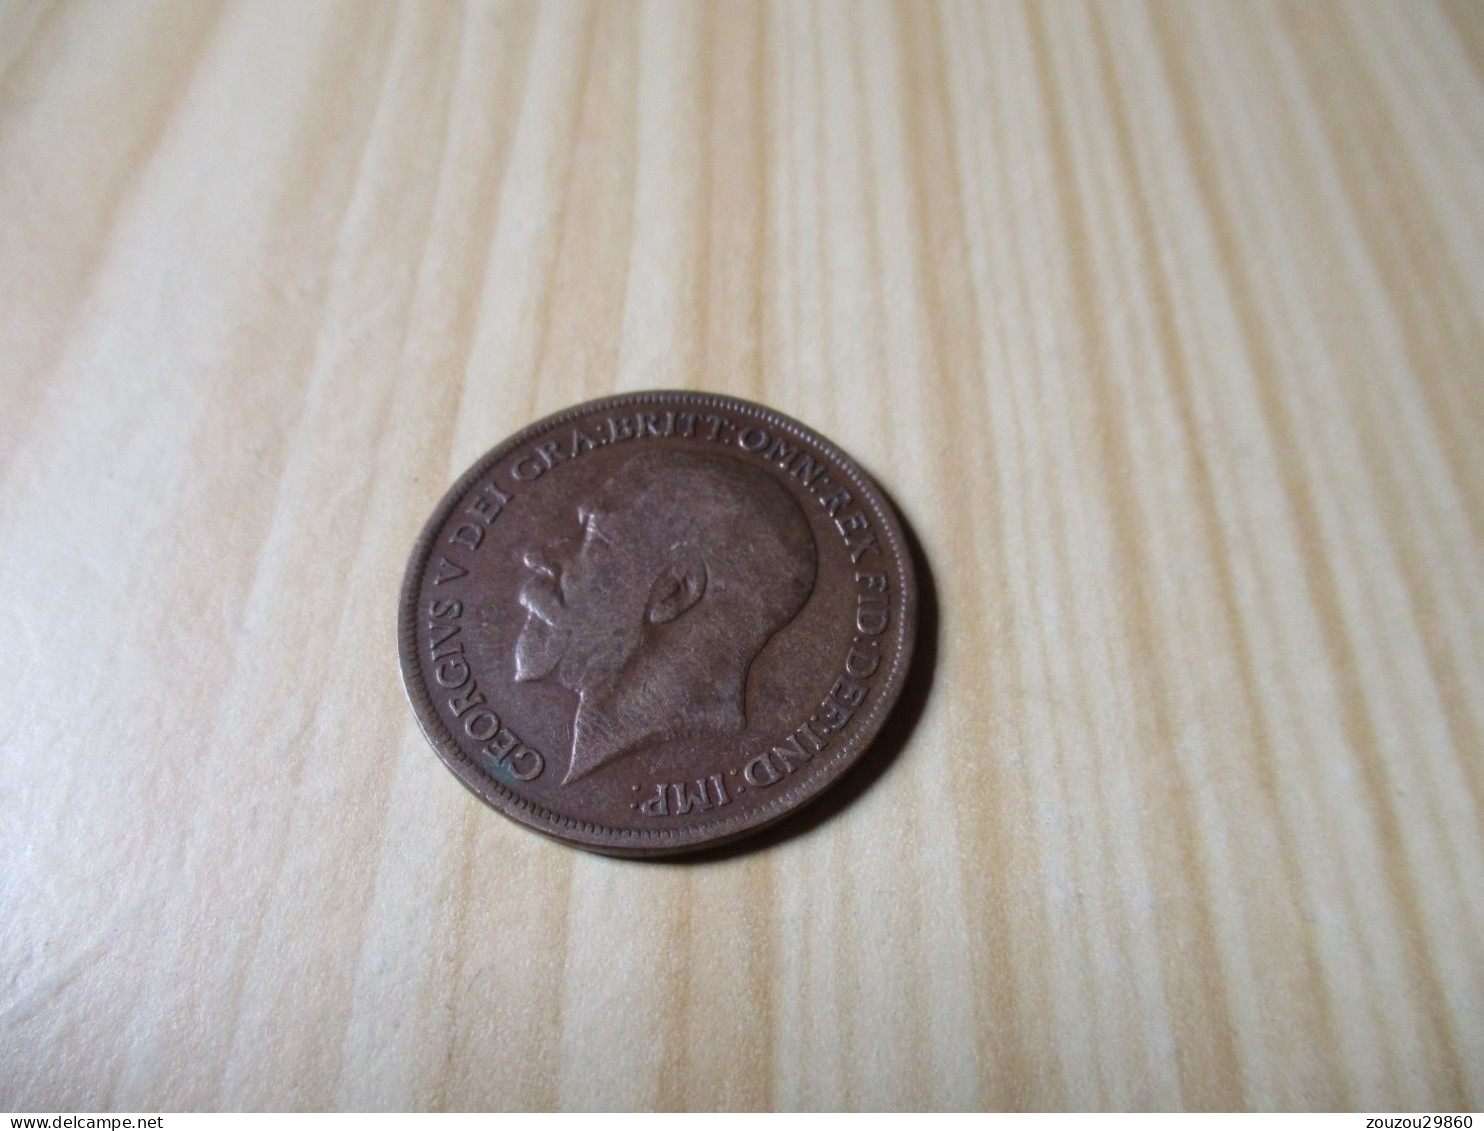 Grande-Bretagne - One Penny George V 1916.N°1001. - D. 1 Penny